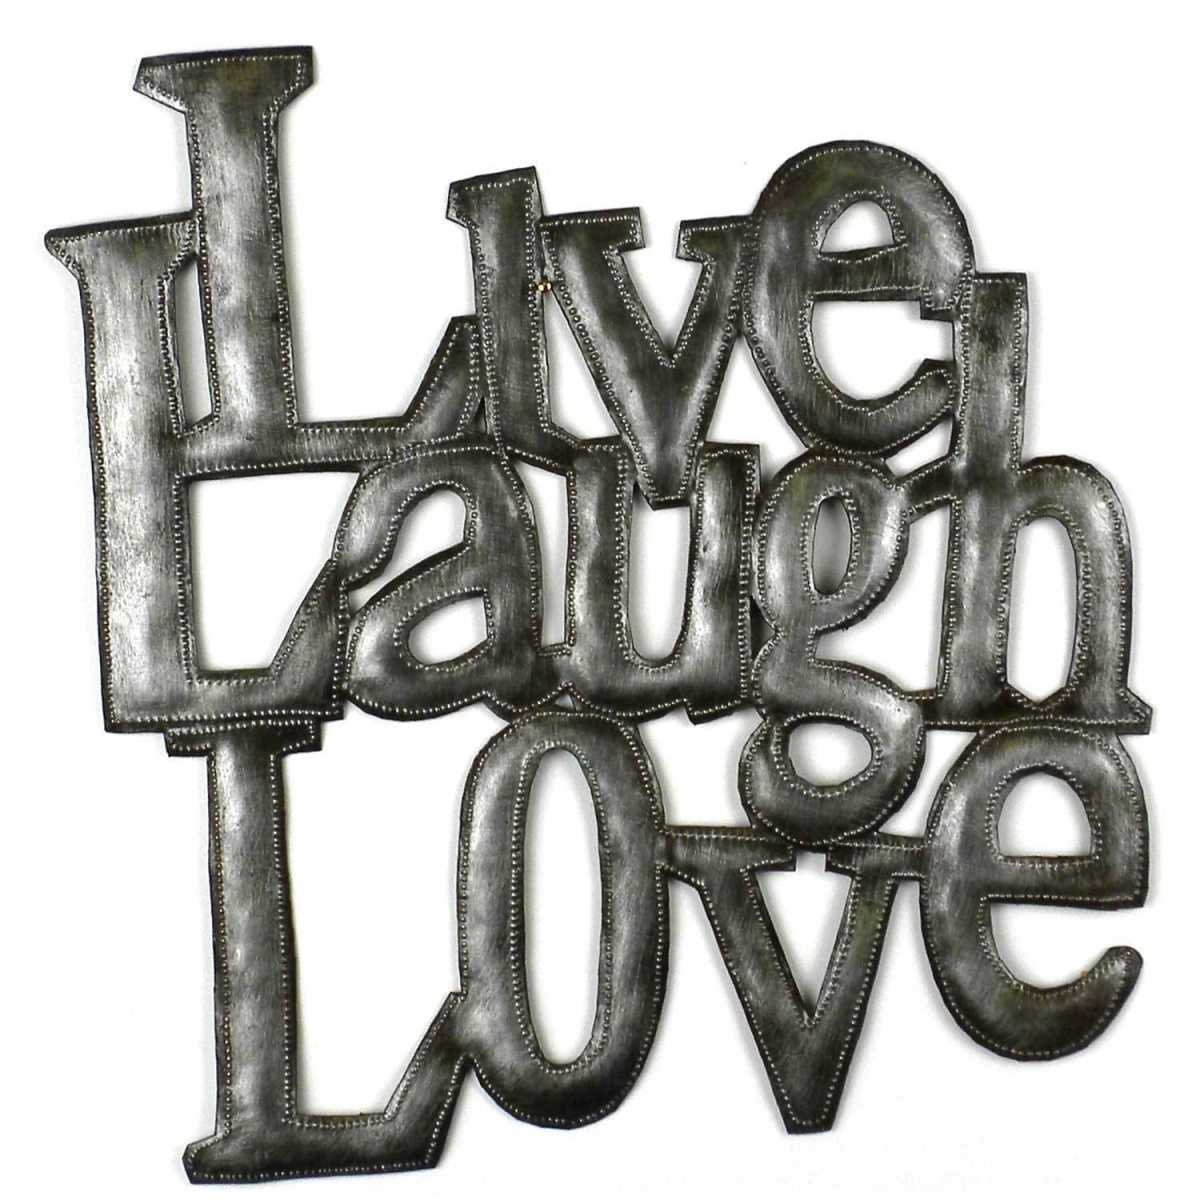 Hmdin04 Love Laugh Live Metal Wall Art